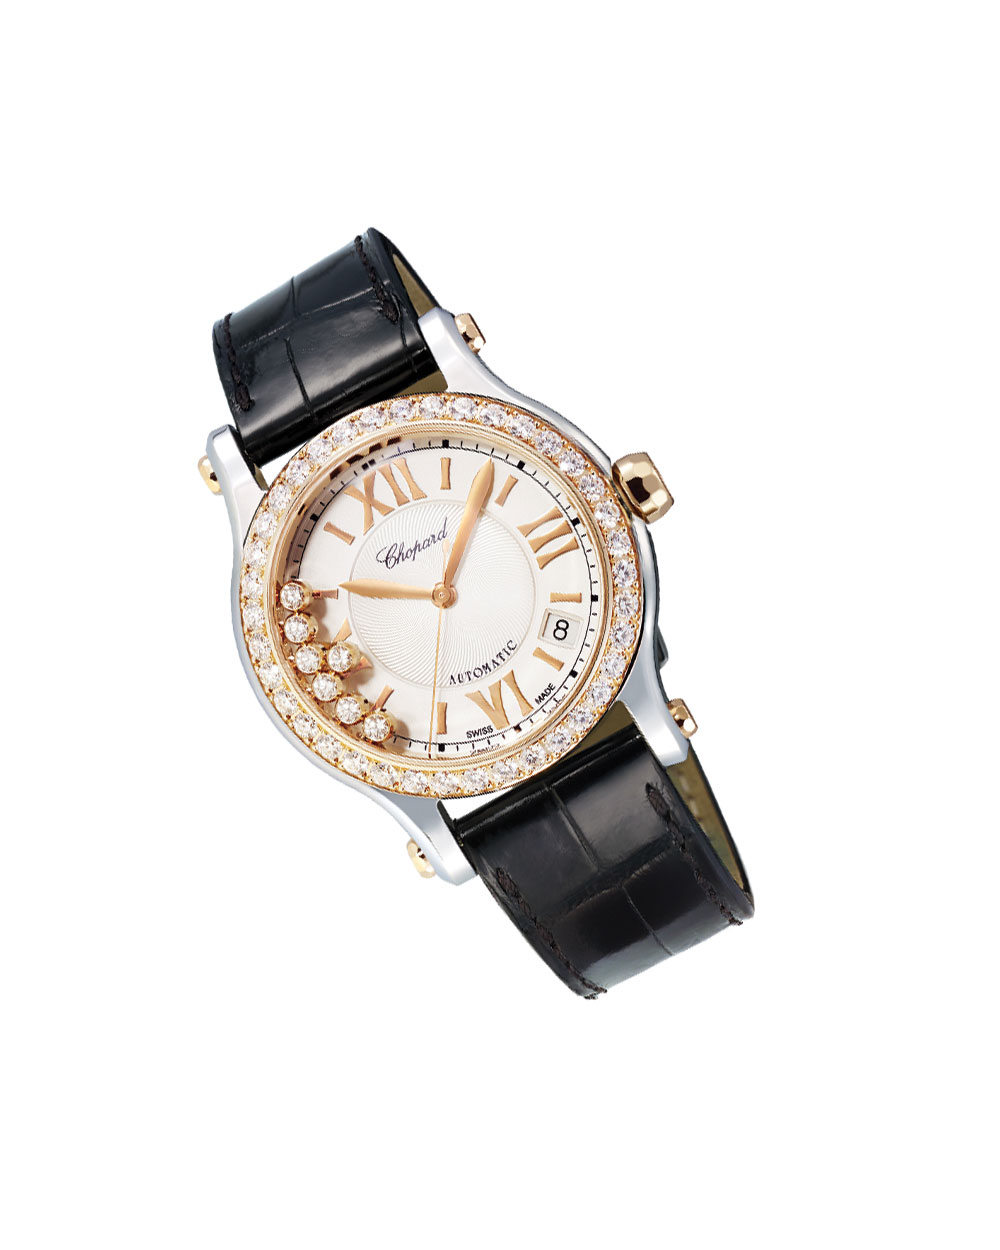 Chopard watch, $28,280